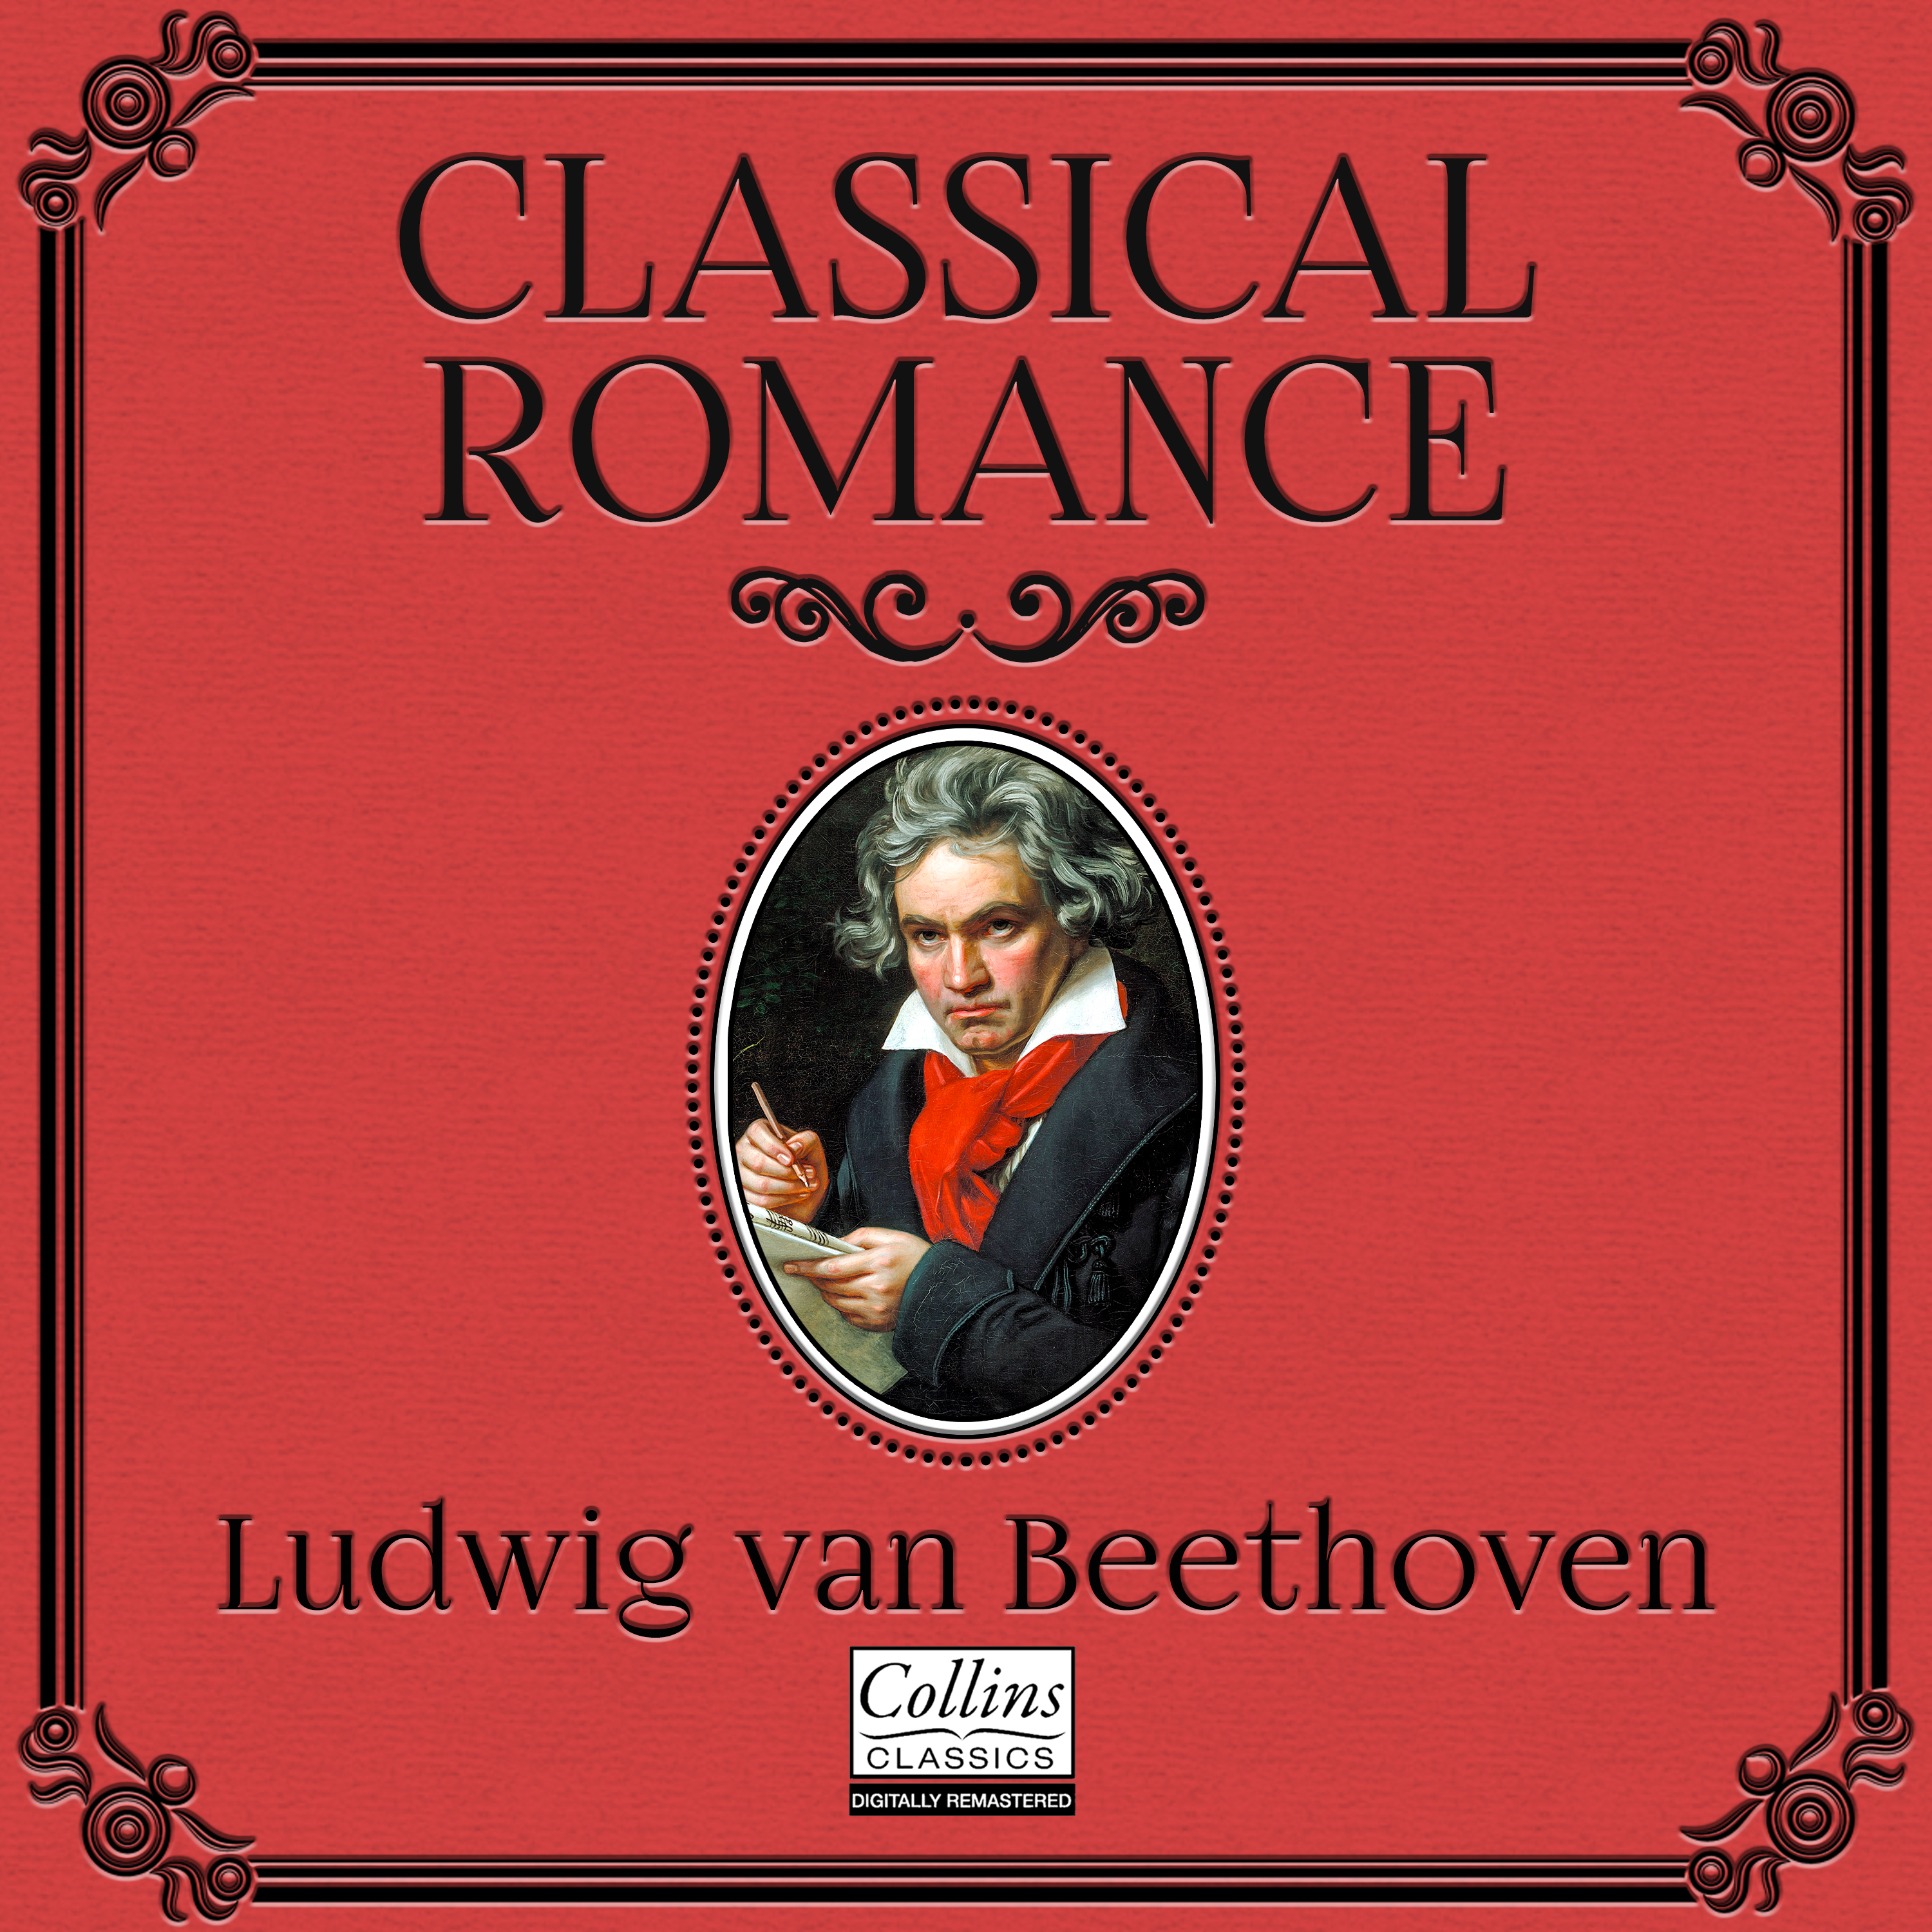 Classical Romance with Ludwig van Beethoven